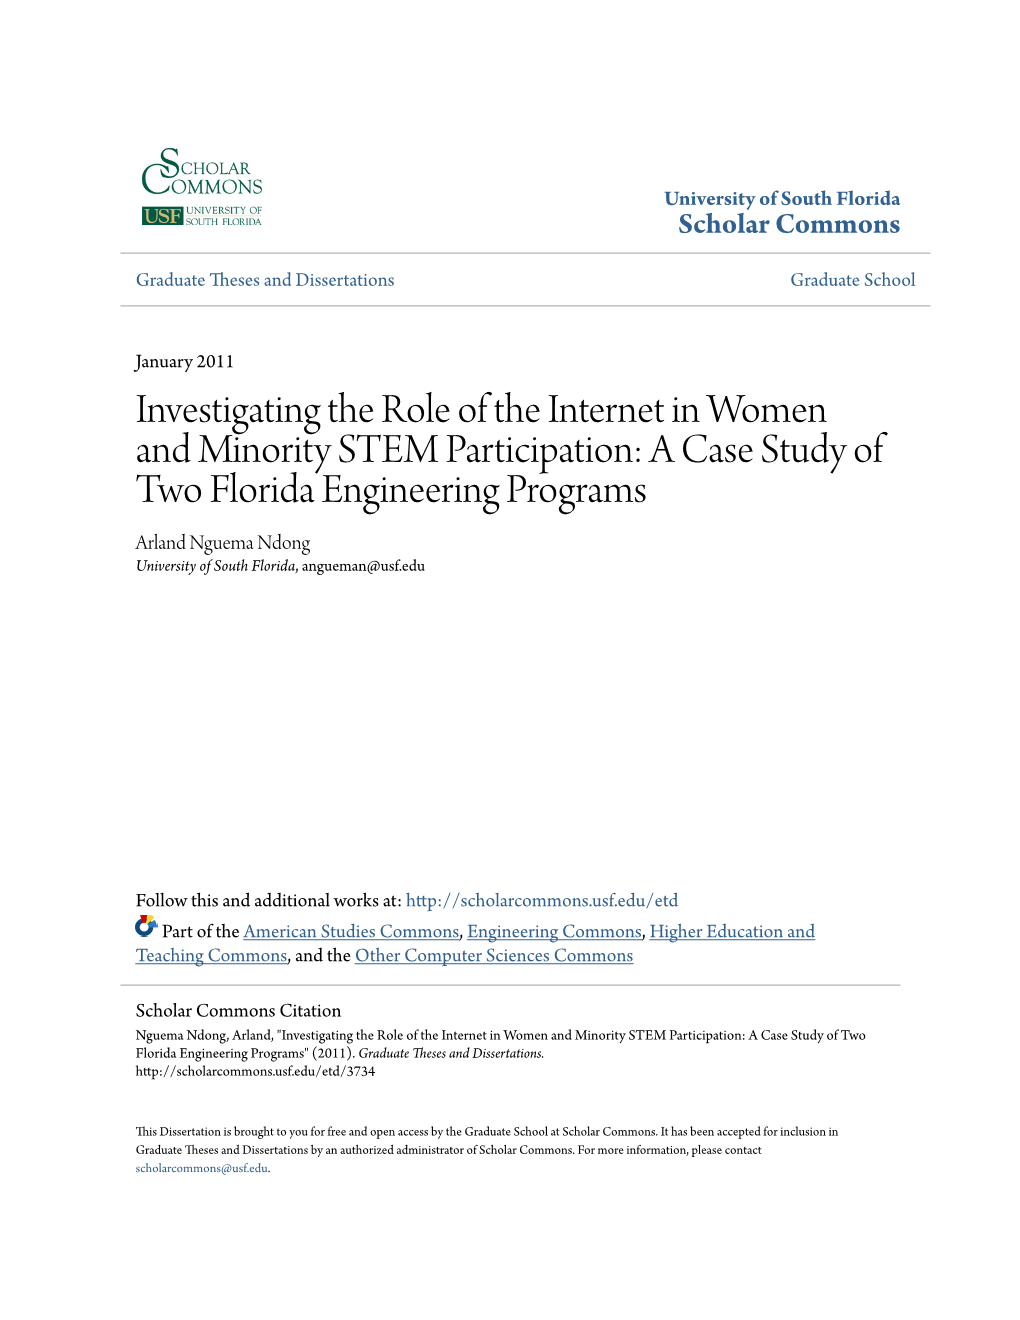 A Case Study of Two Florida Engineering Programs Arland Nguema Ndong University of South Florida, Angueman@Usf.Edu